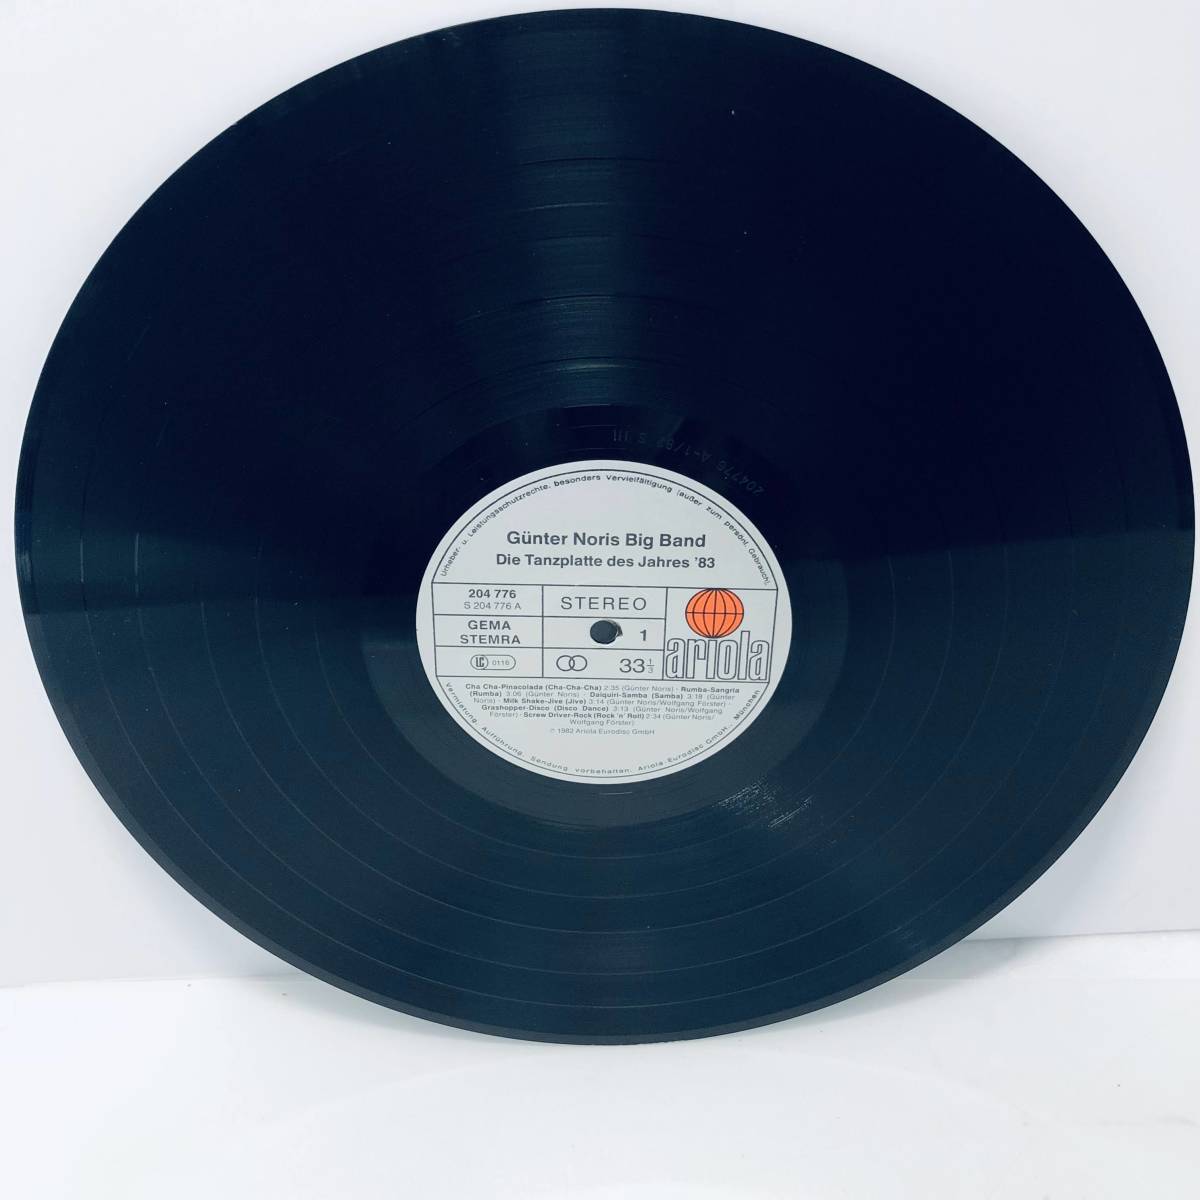 【LP】Gunter Noris Big Band/Die Tanzplatte Des Jahres '83 レコード ※その他レコード出品中！！同梱可能です！！_画像4